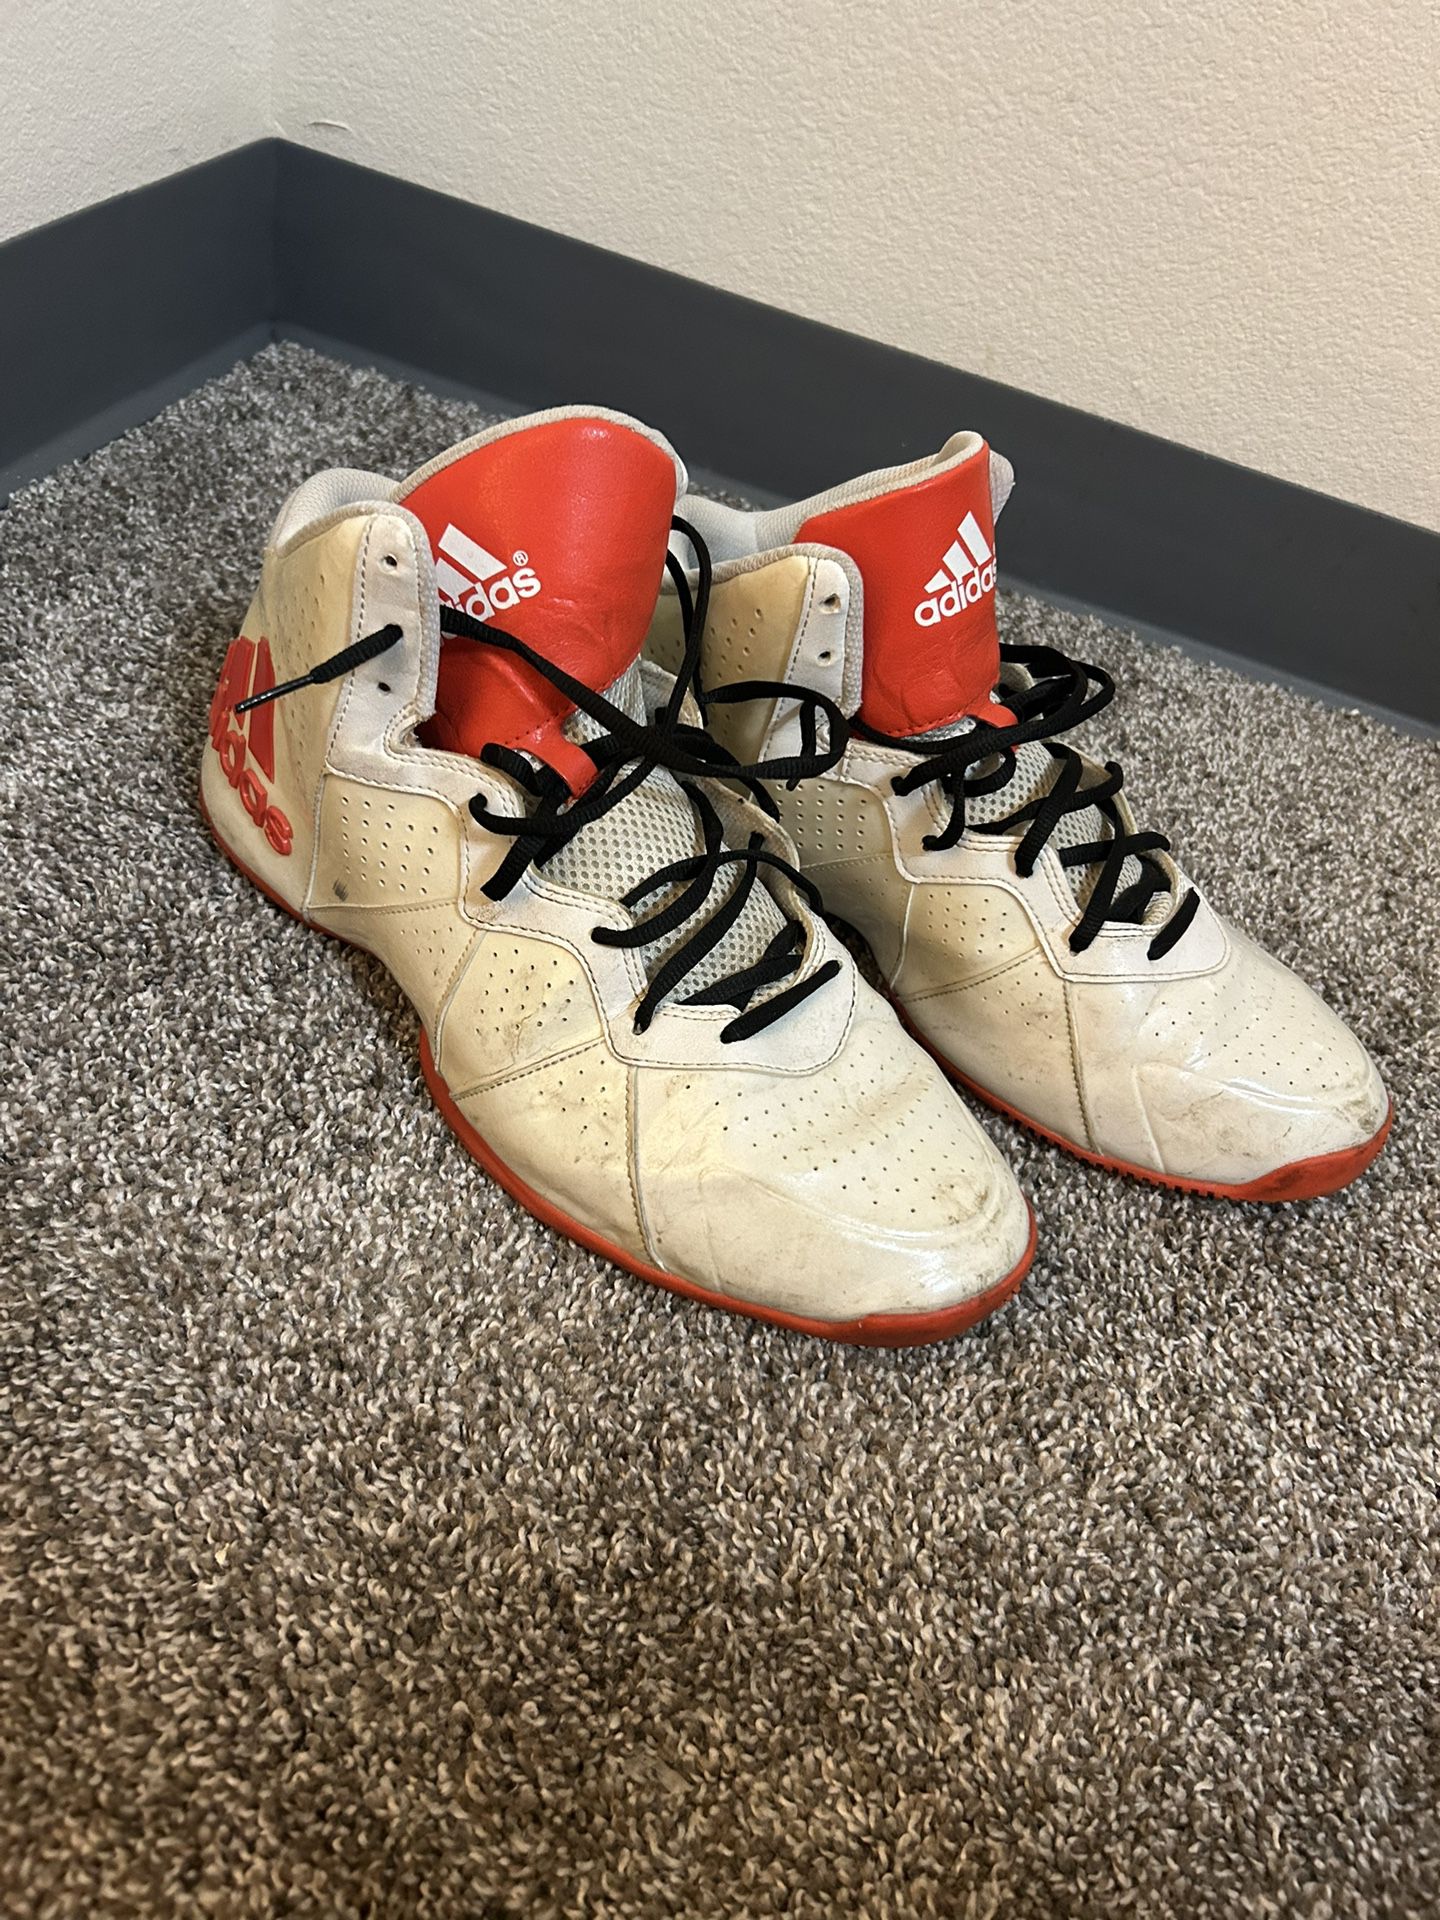 Adidas Basketball Shoes Size 13